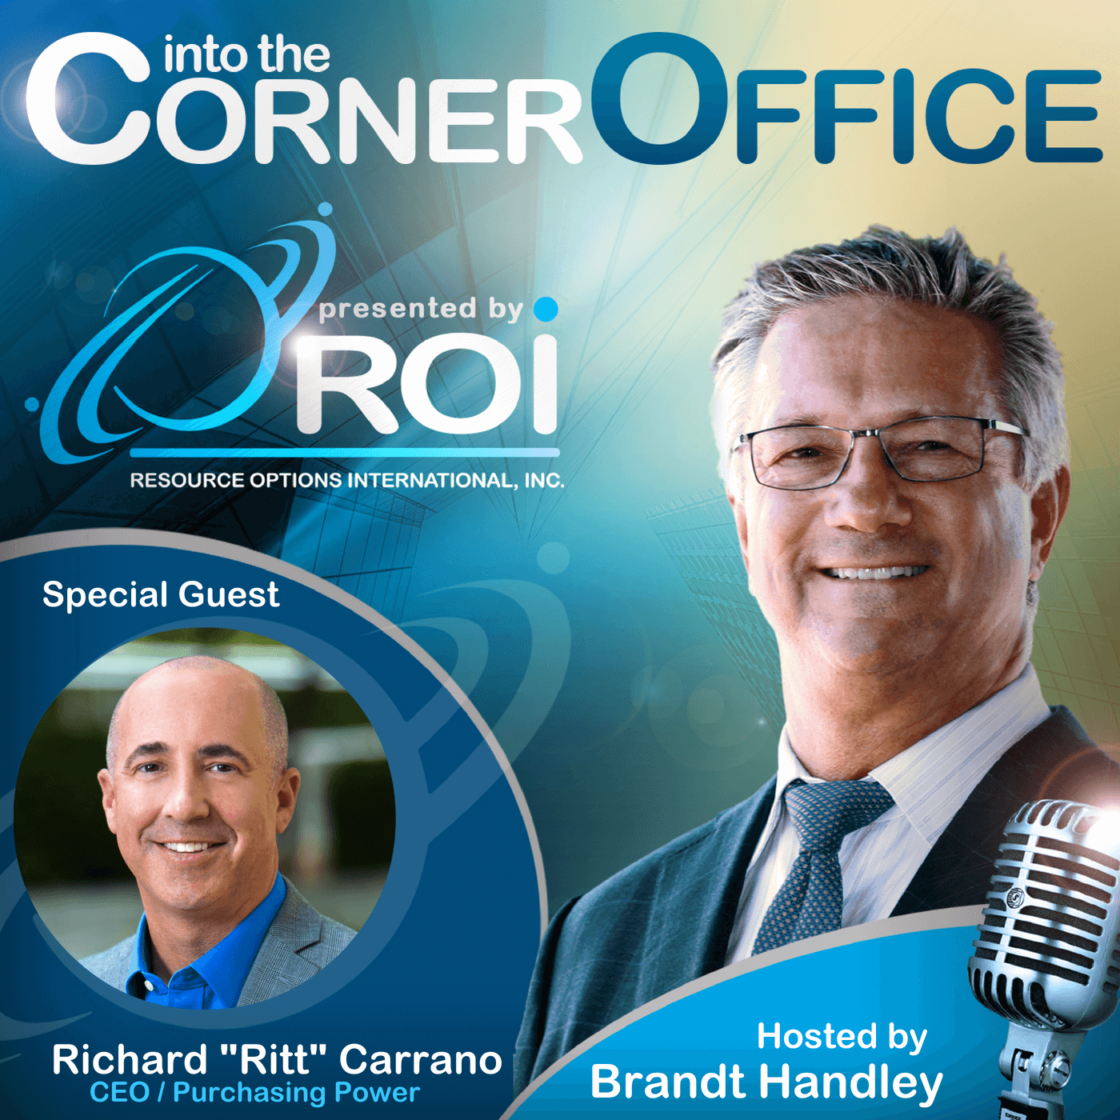 Ritt Carrano, CEO, Purchasing Power